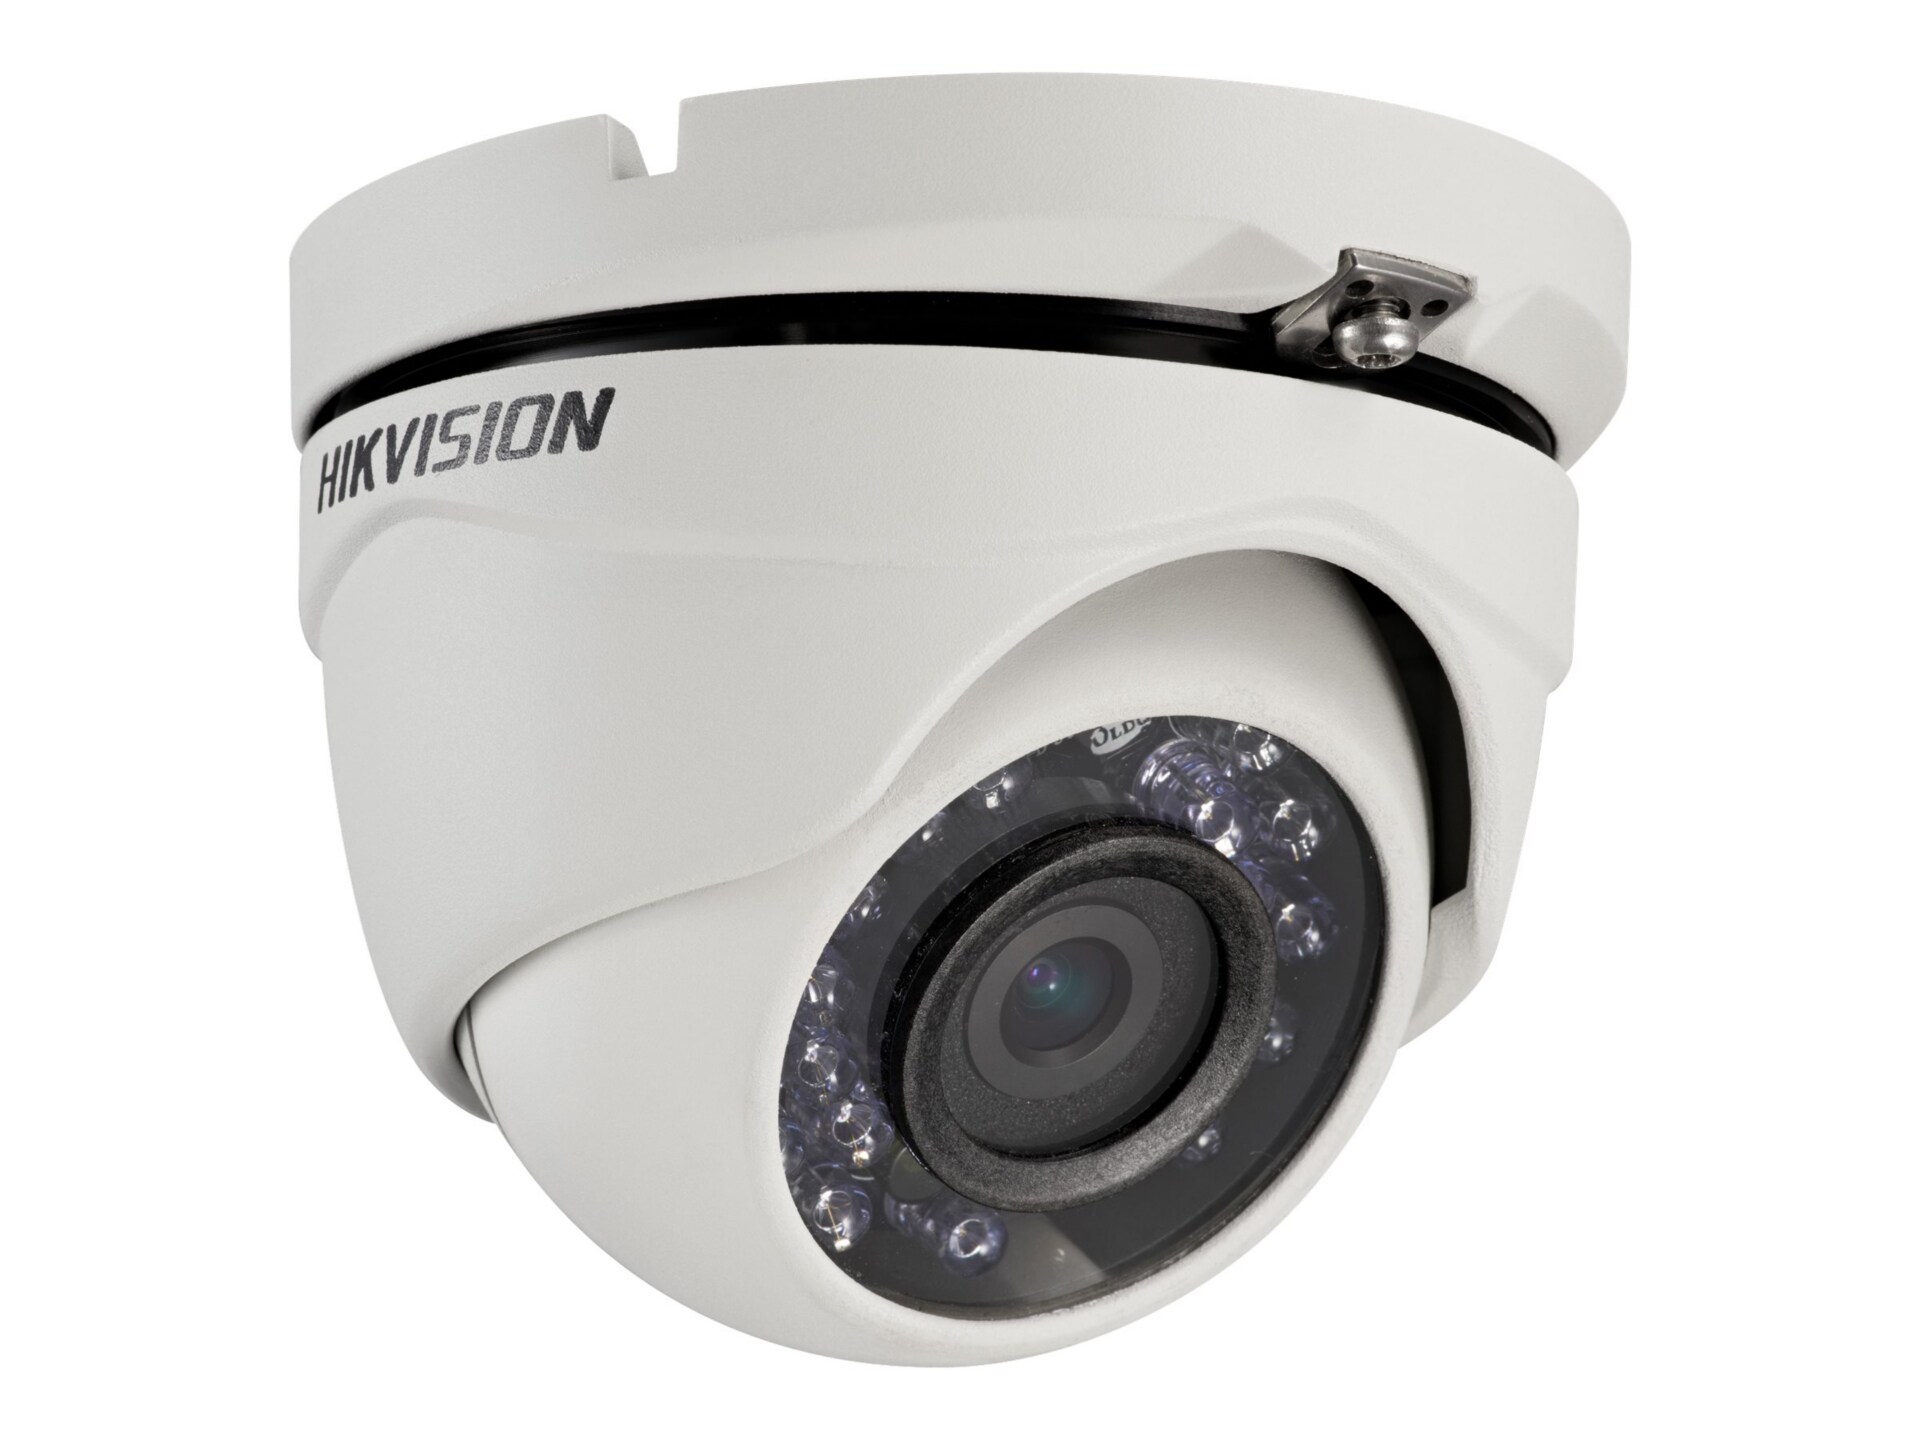 Hikvision Turbo HD Camera DS-2CE56C2T-IRM - surveillance camera